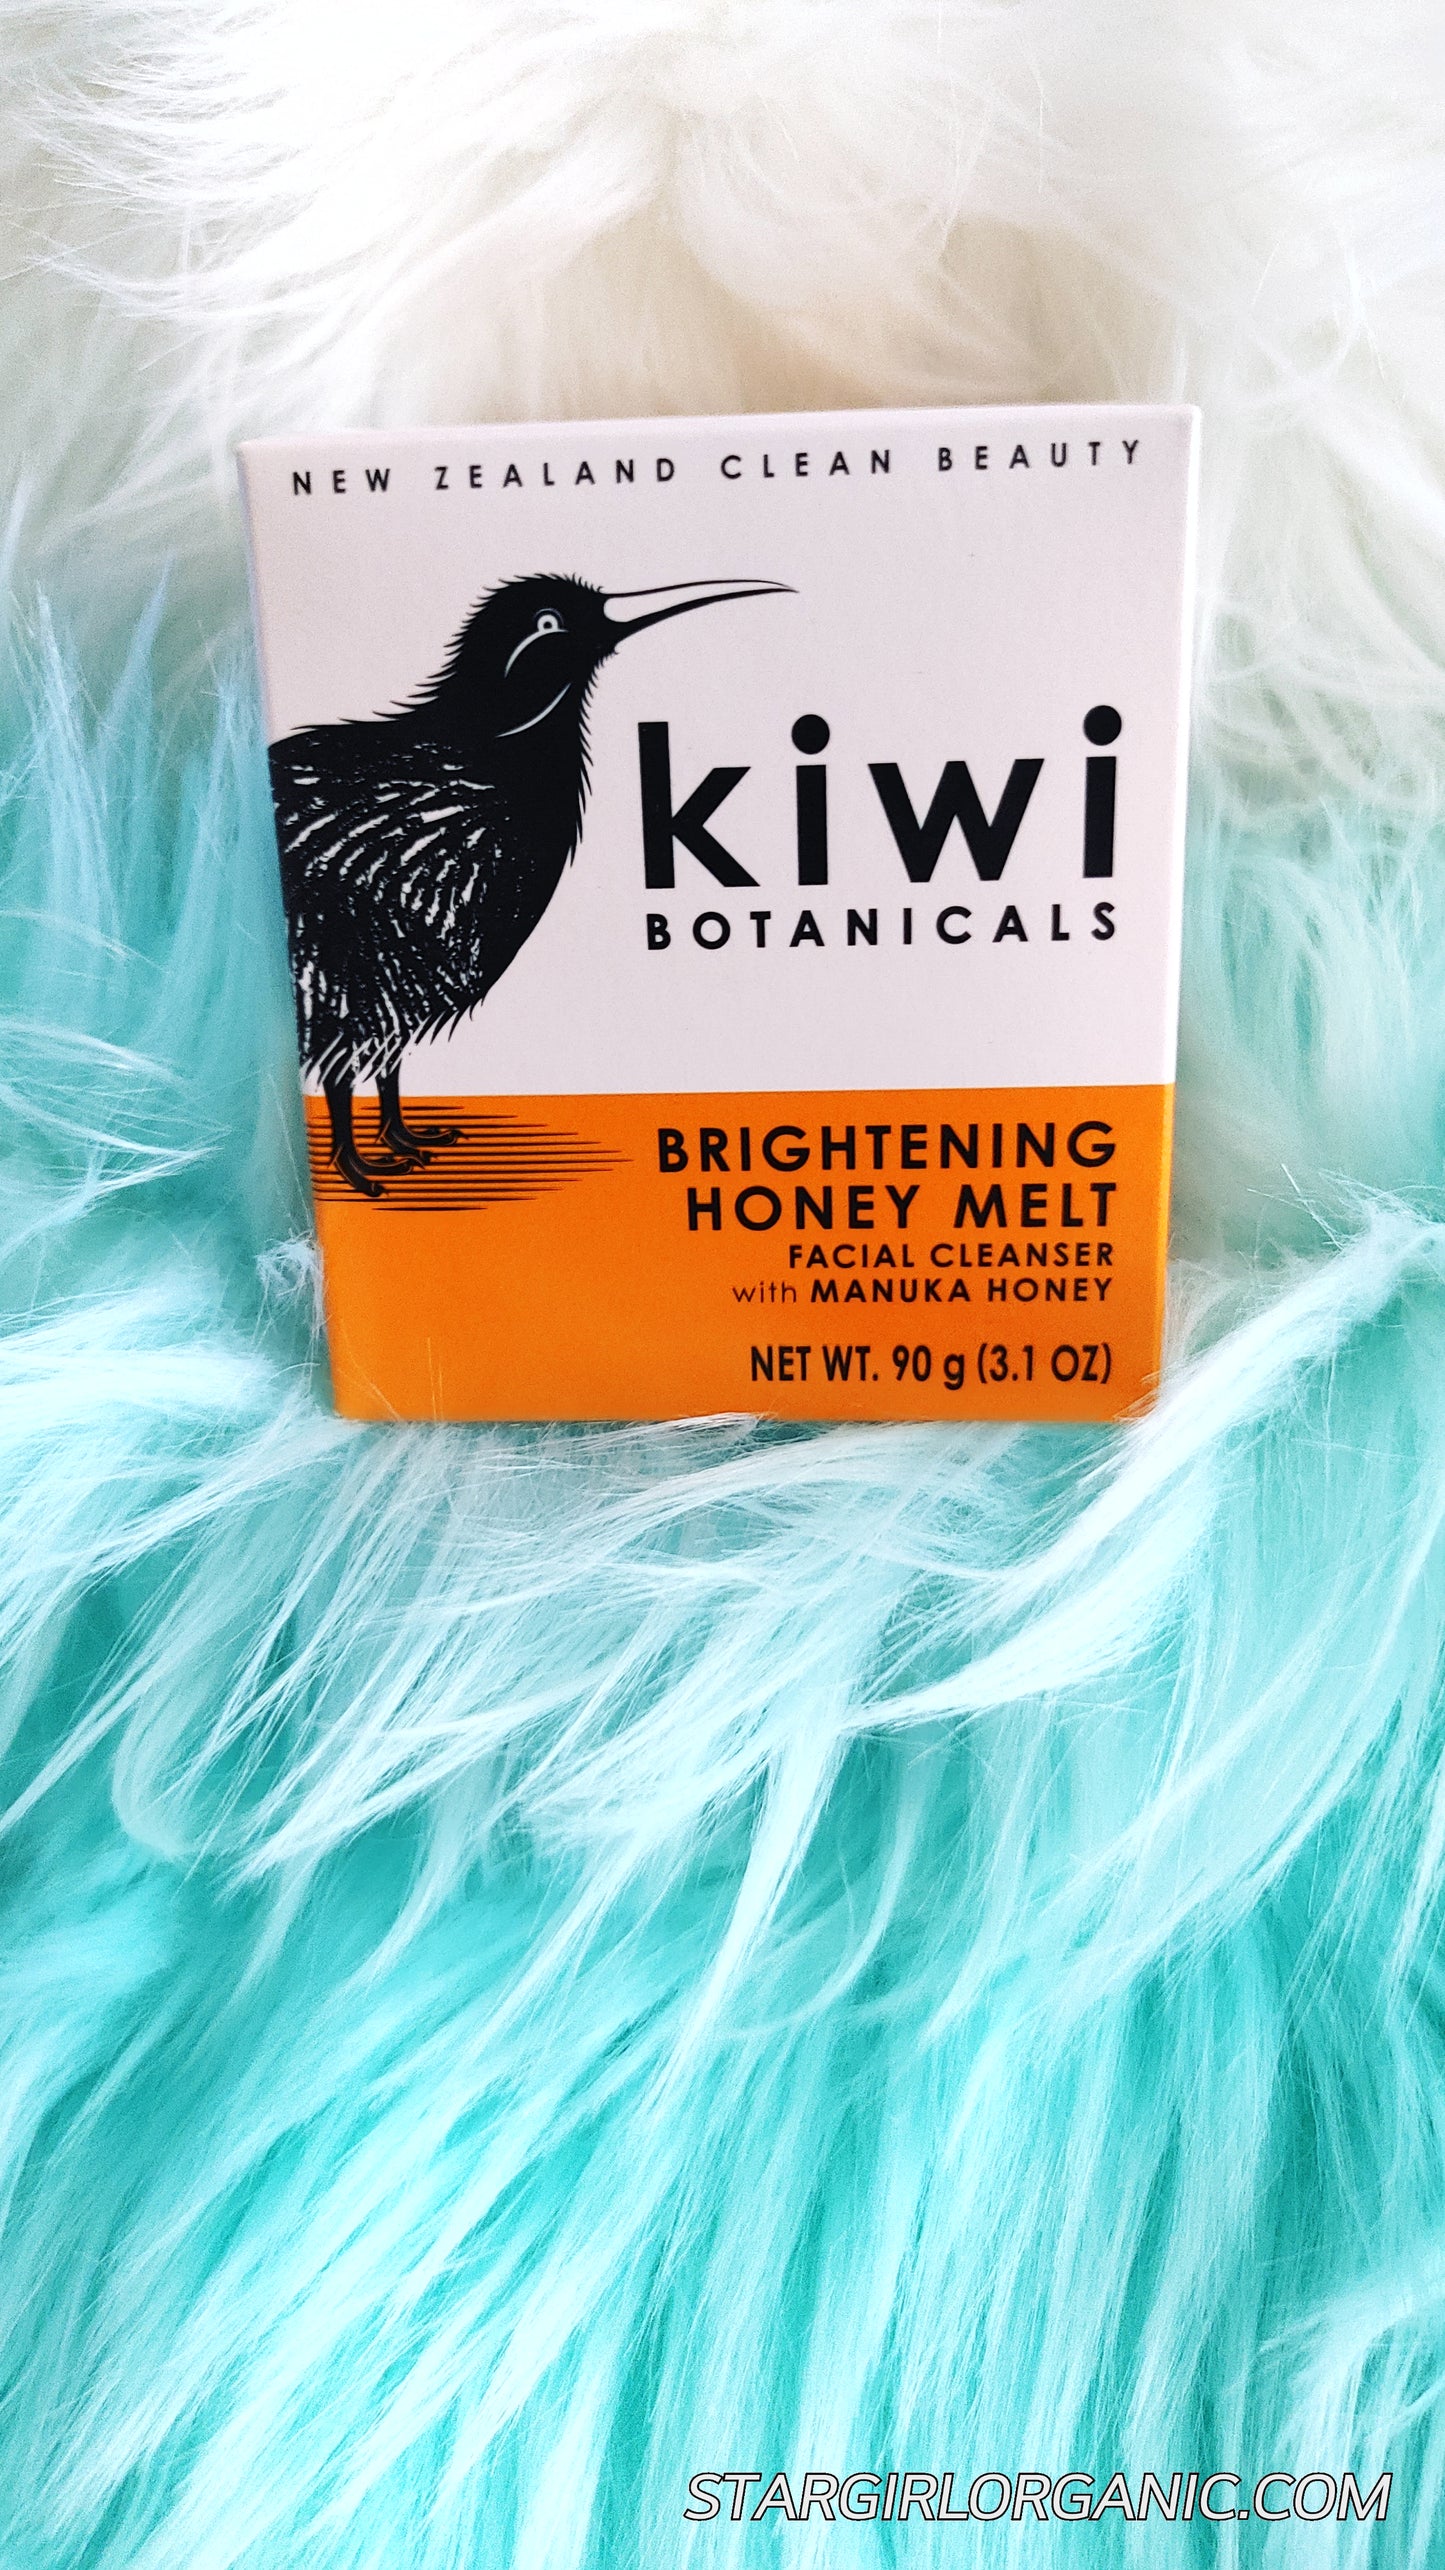 Kiwi Botanicals Facial Cleanser, Brightening Honey Melt